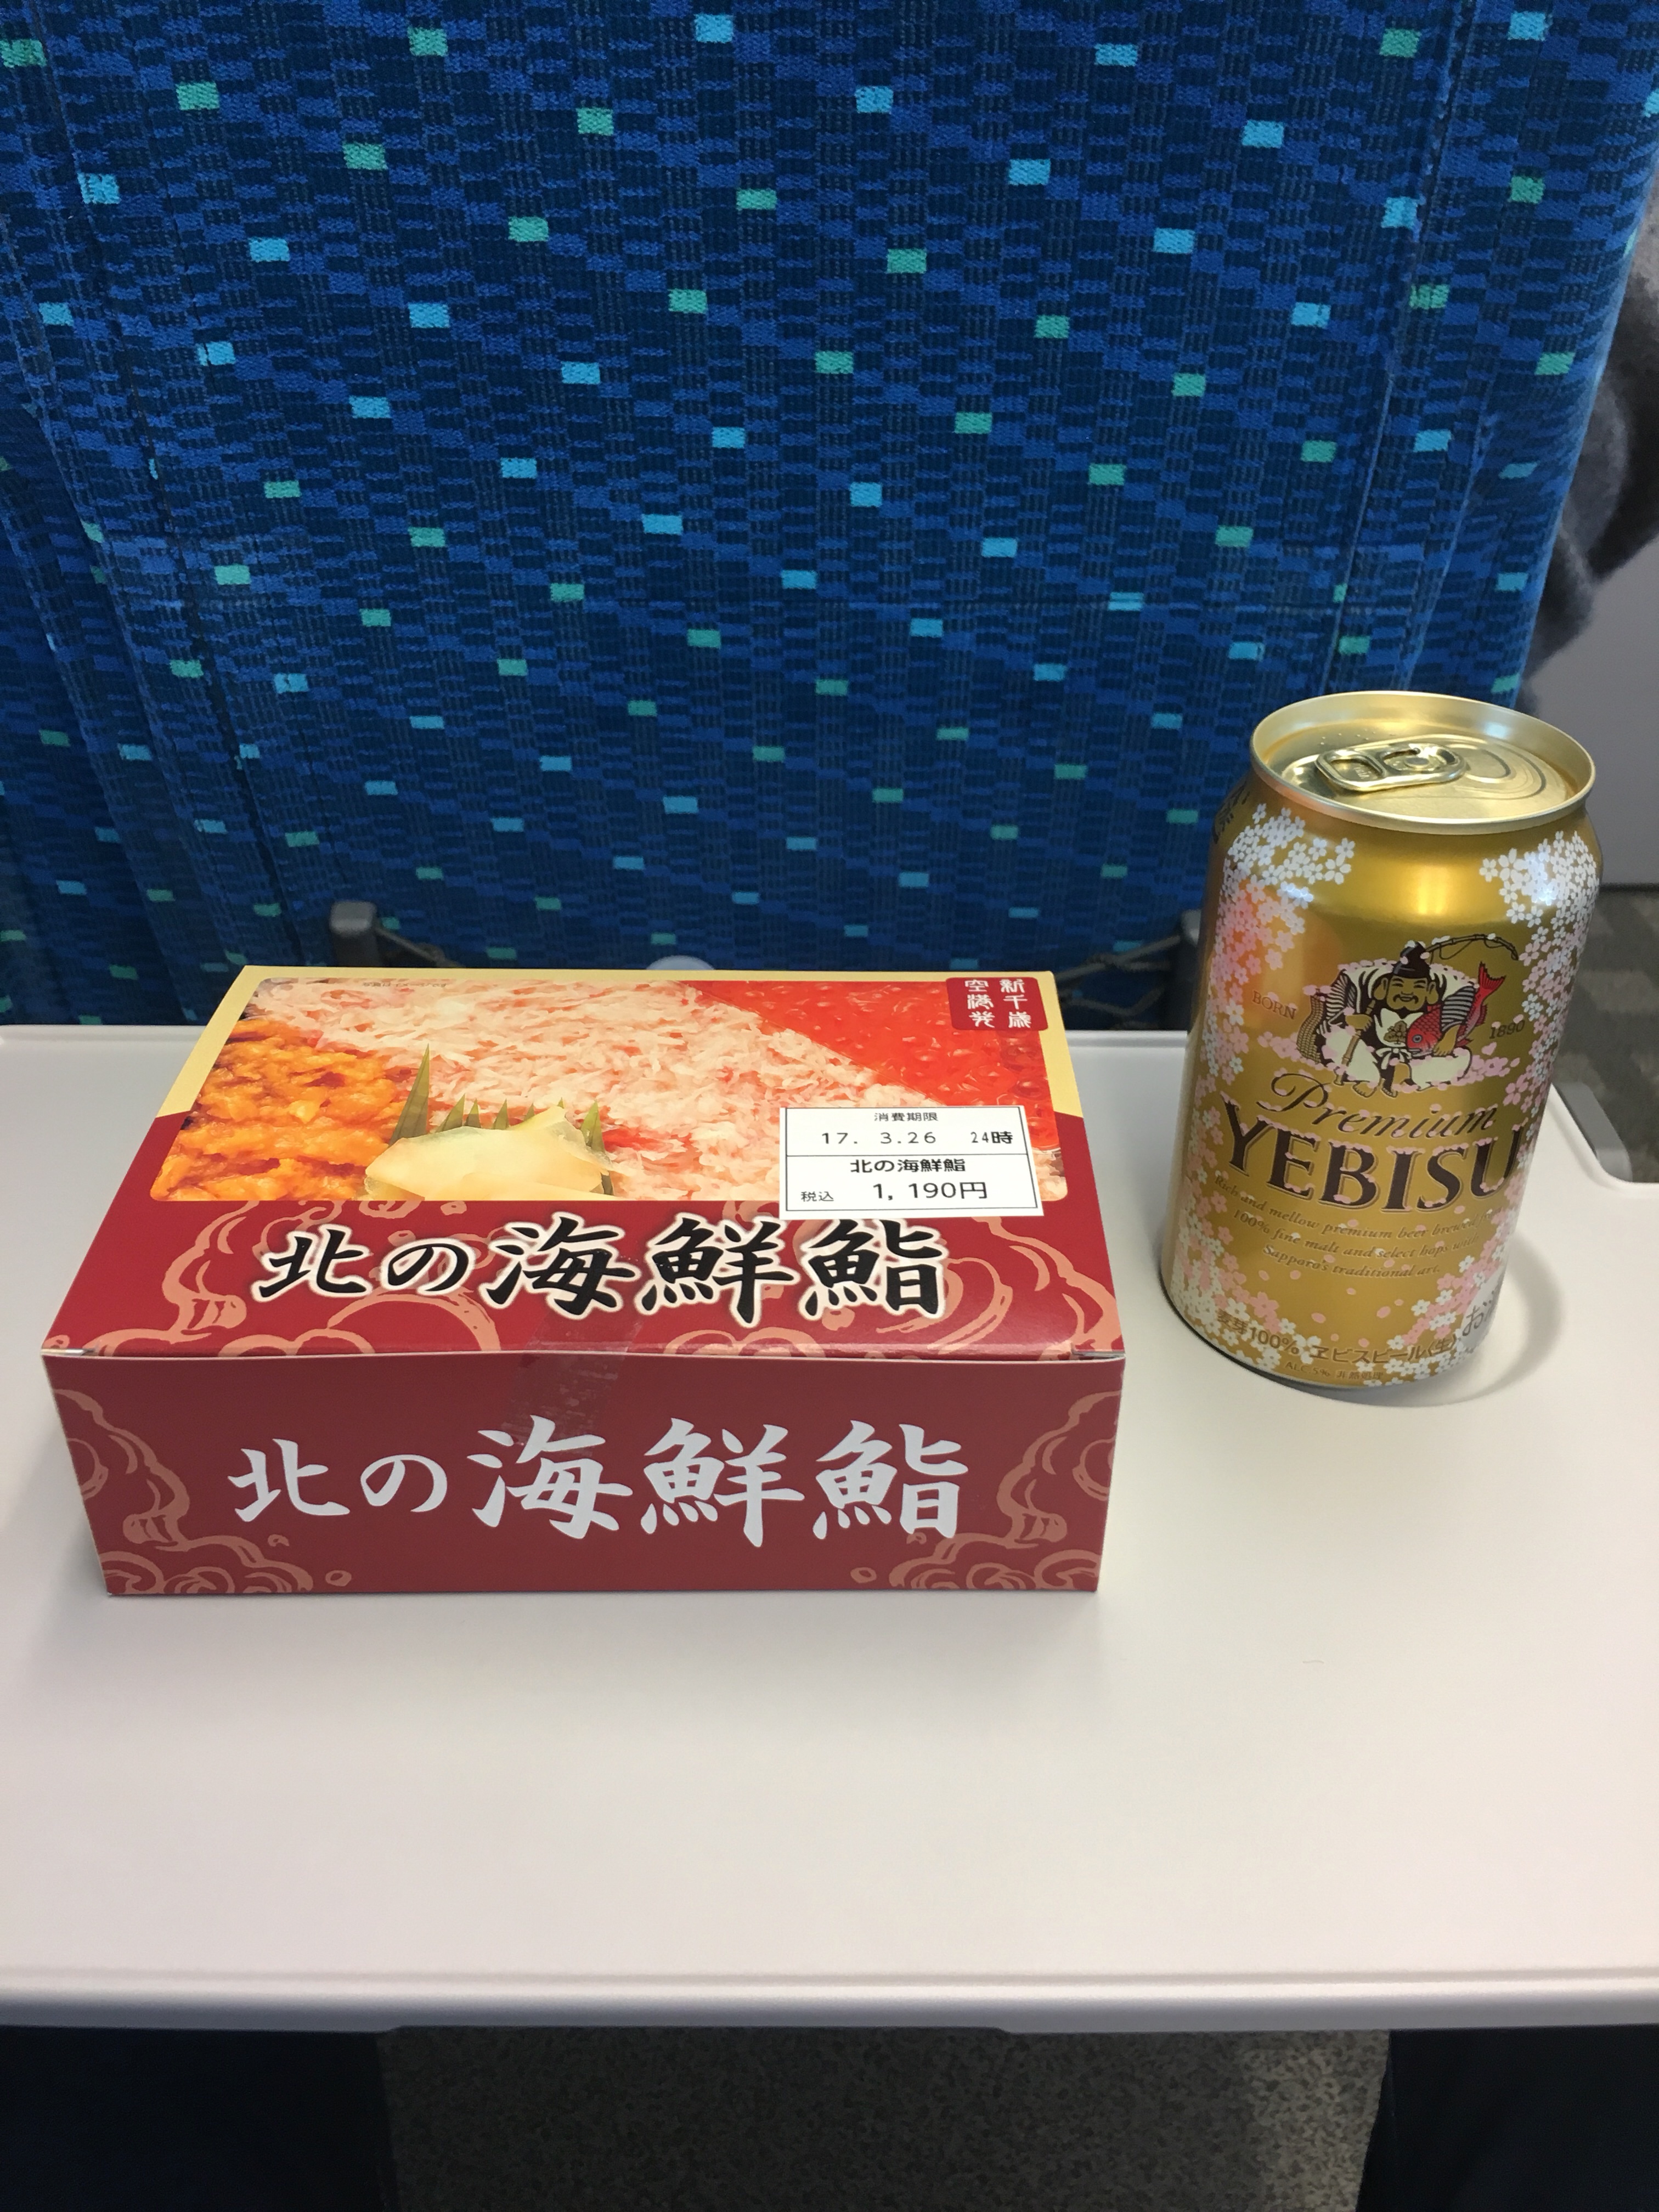 Business trip by Shinkansen